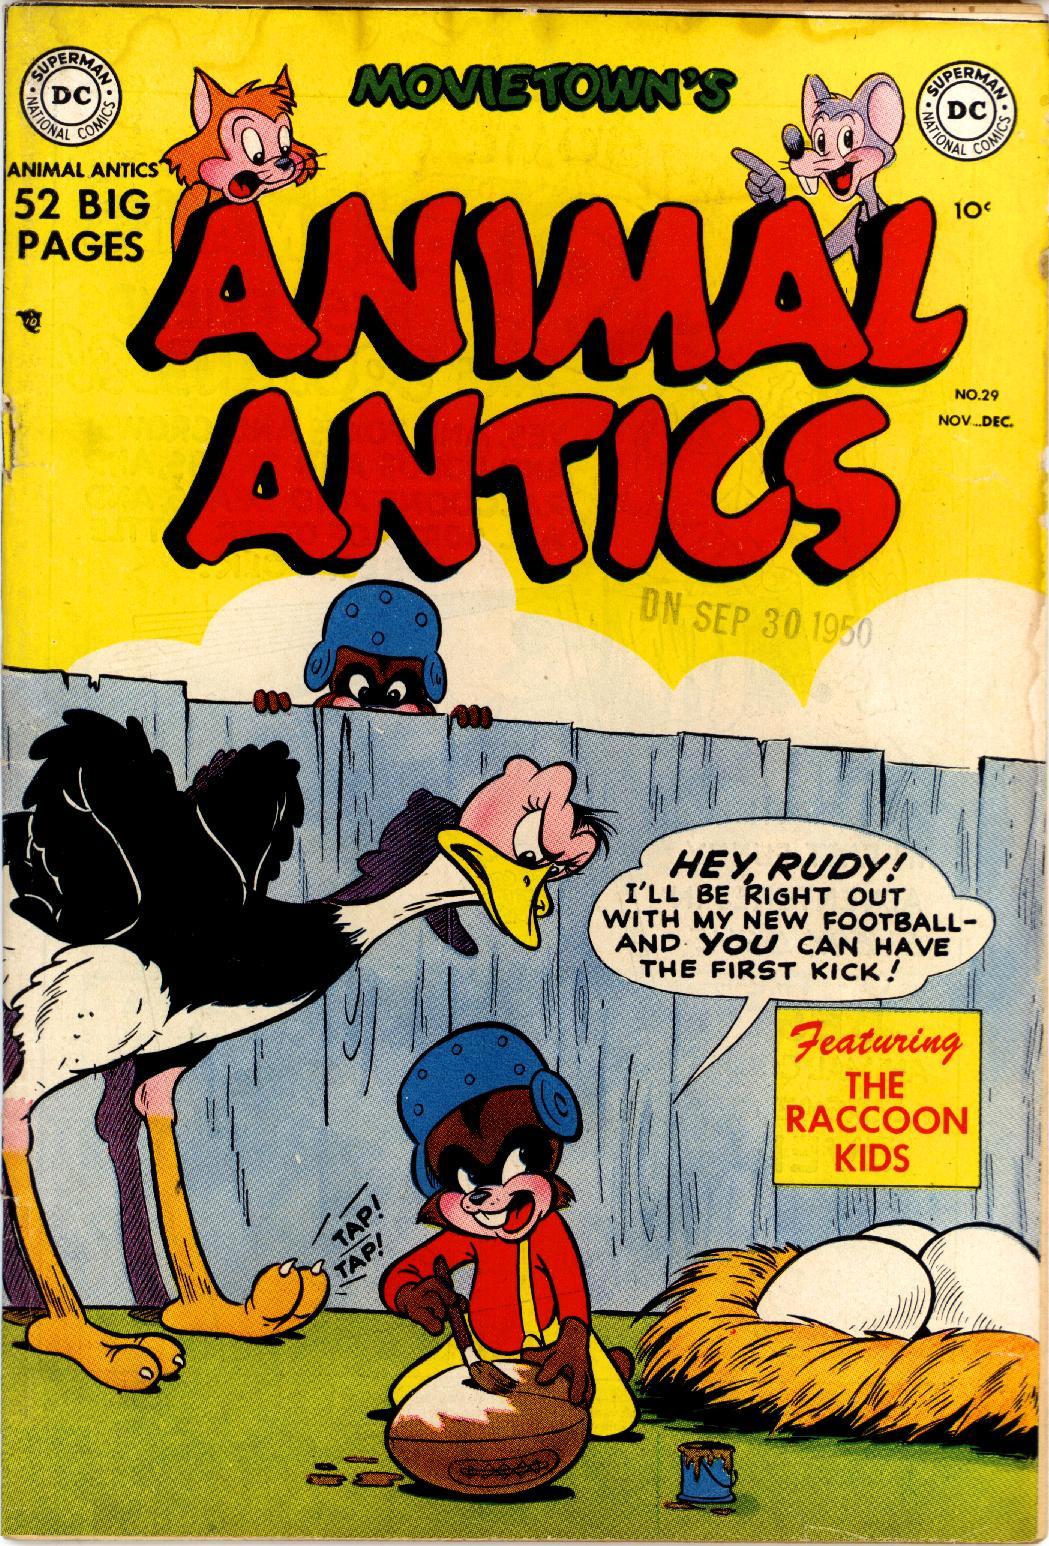 Movietown's Animal Antics Vol. 1 #29